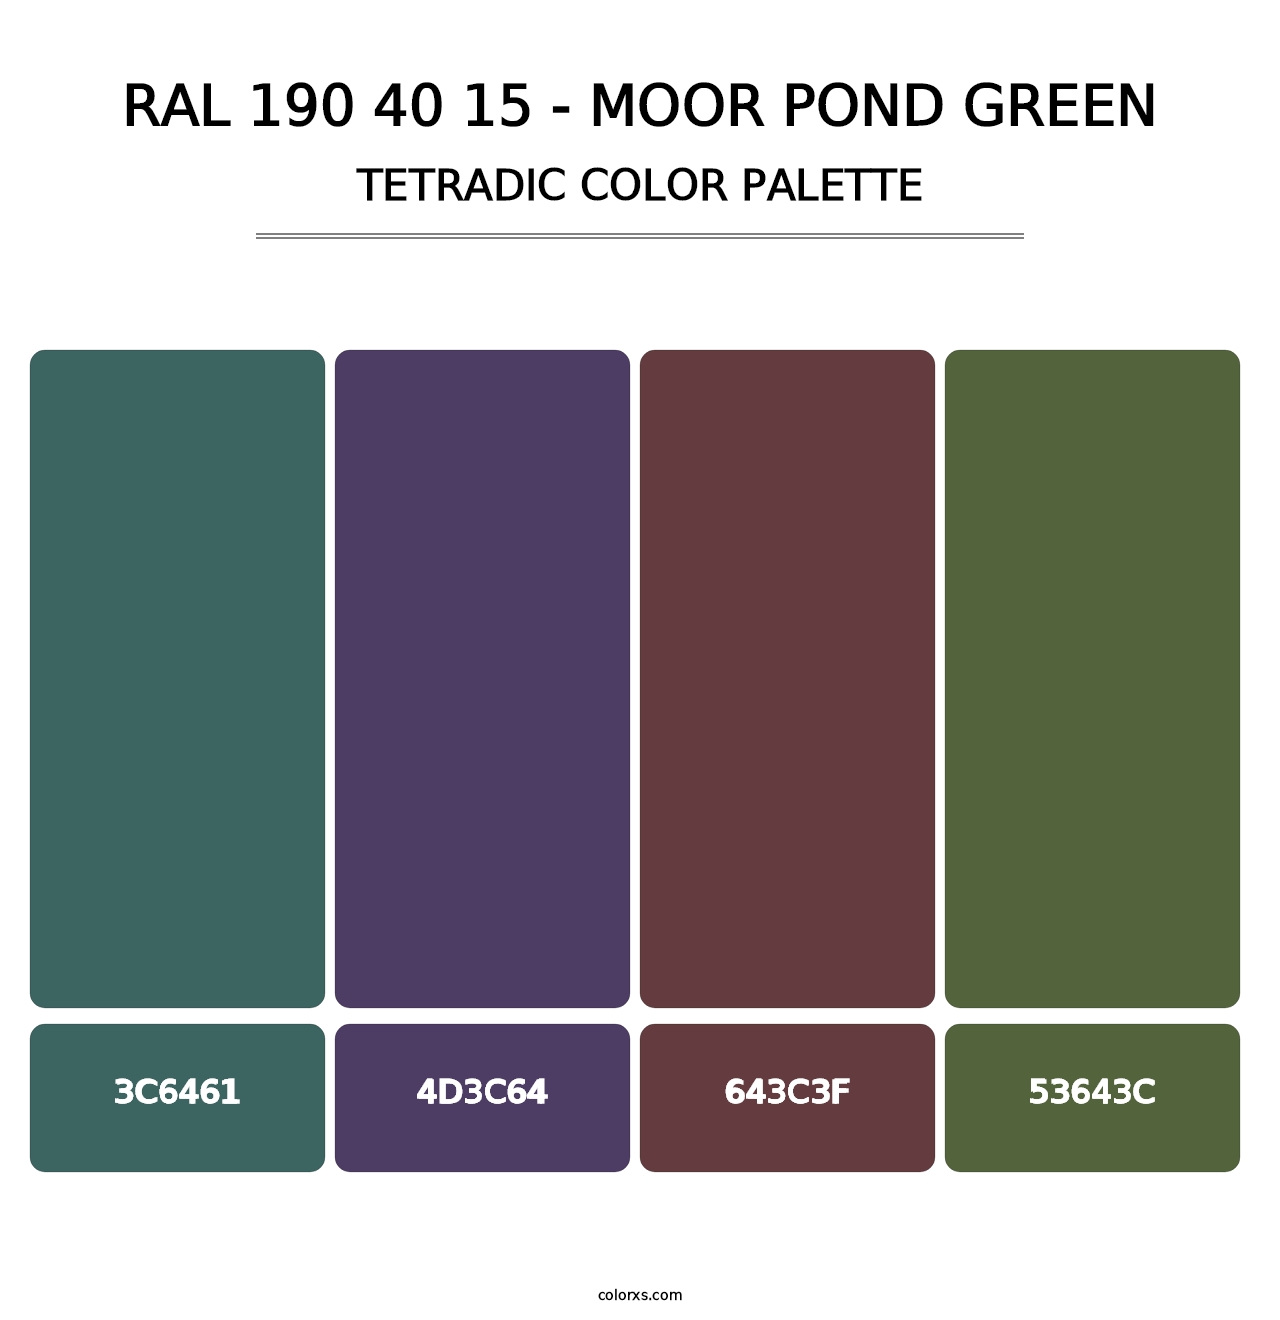 RAL 190 40 15 - Moor Pond Green - Tetradic Color Palette